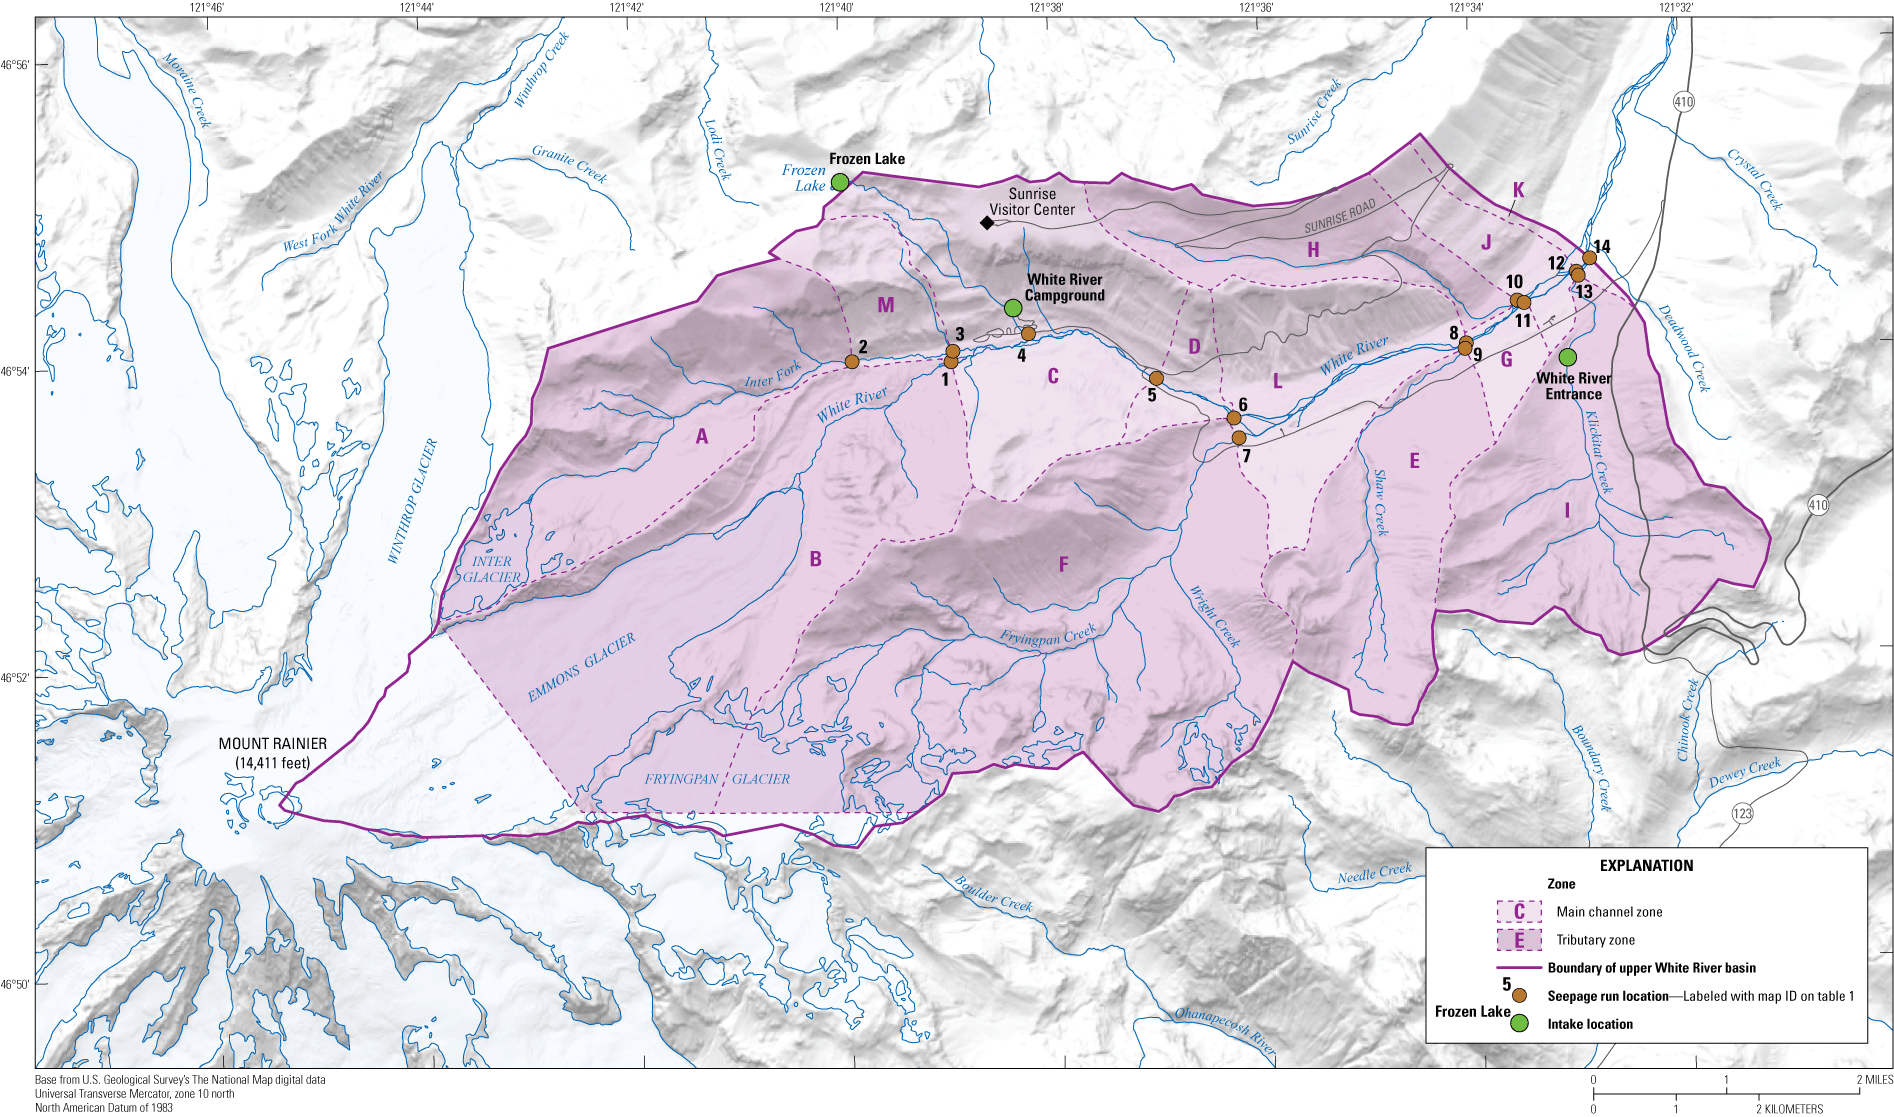 Upper White River drainage basin in Mount Rainier National Park, Washington.